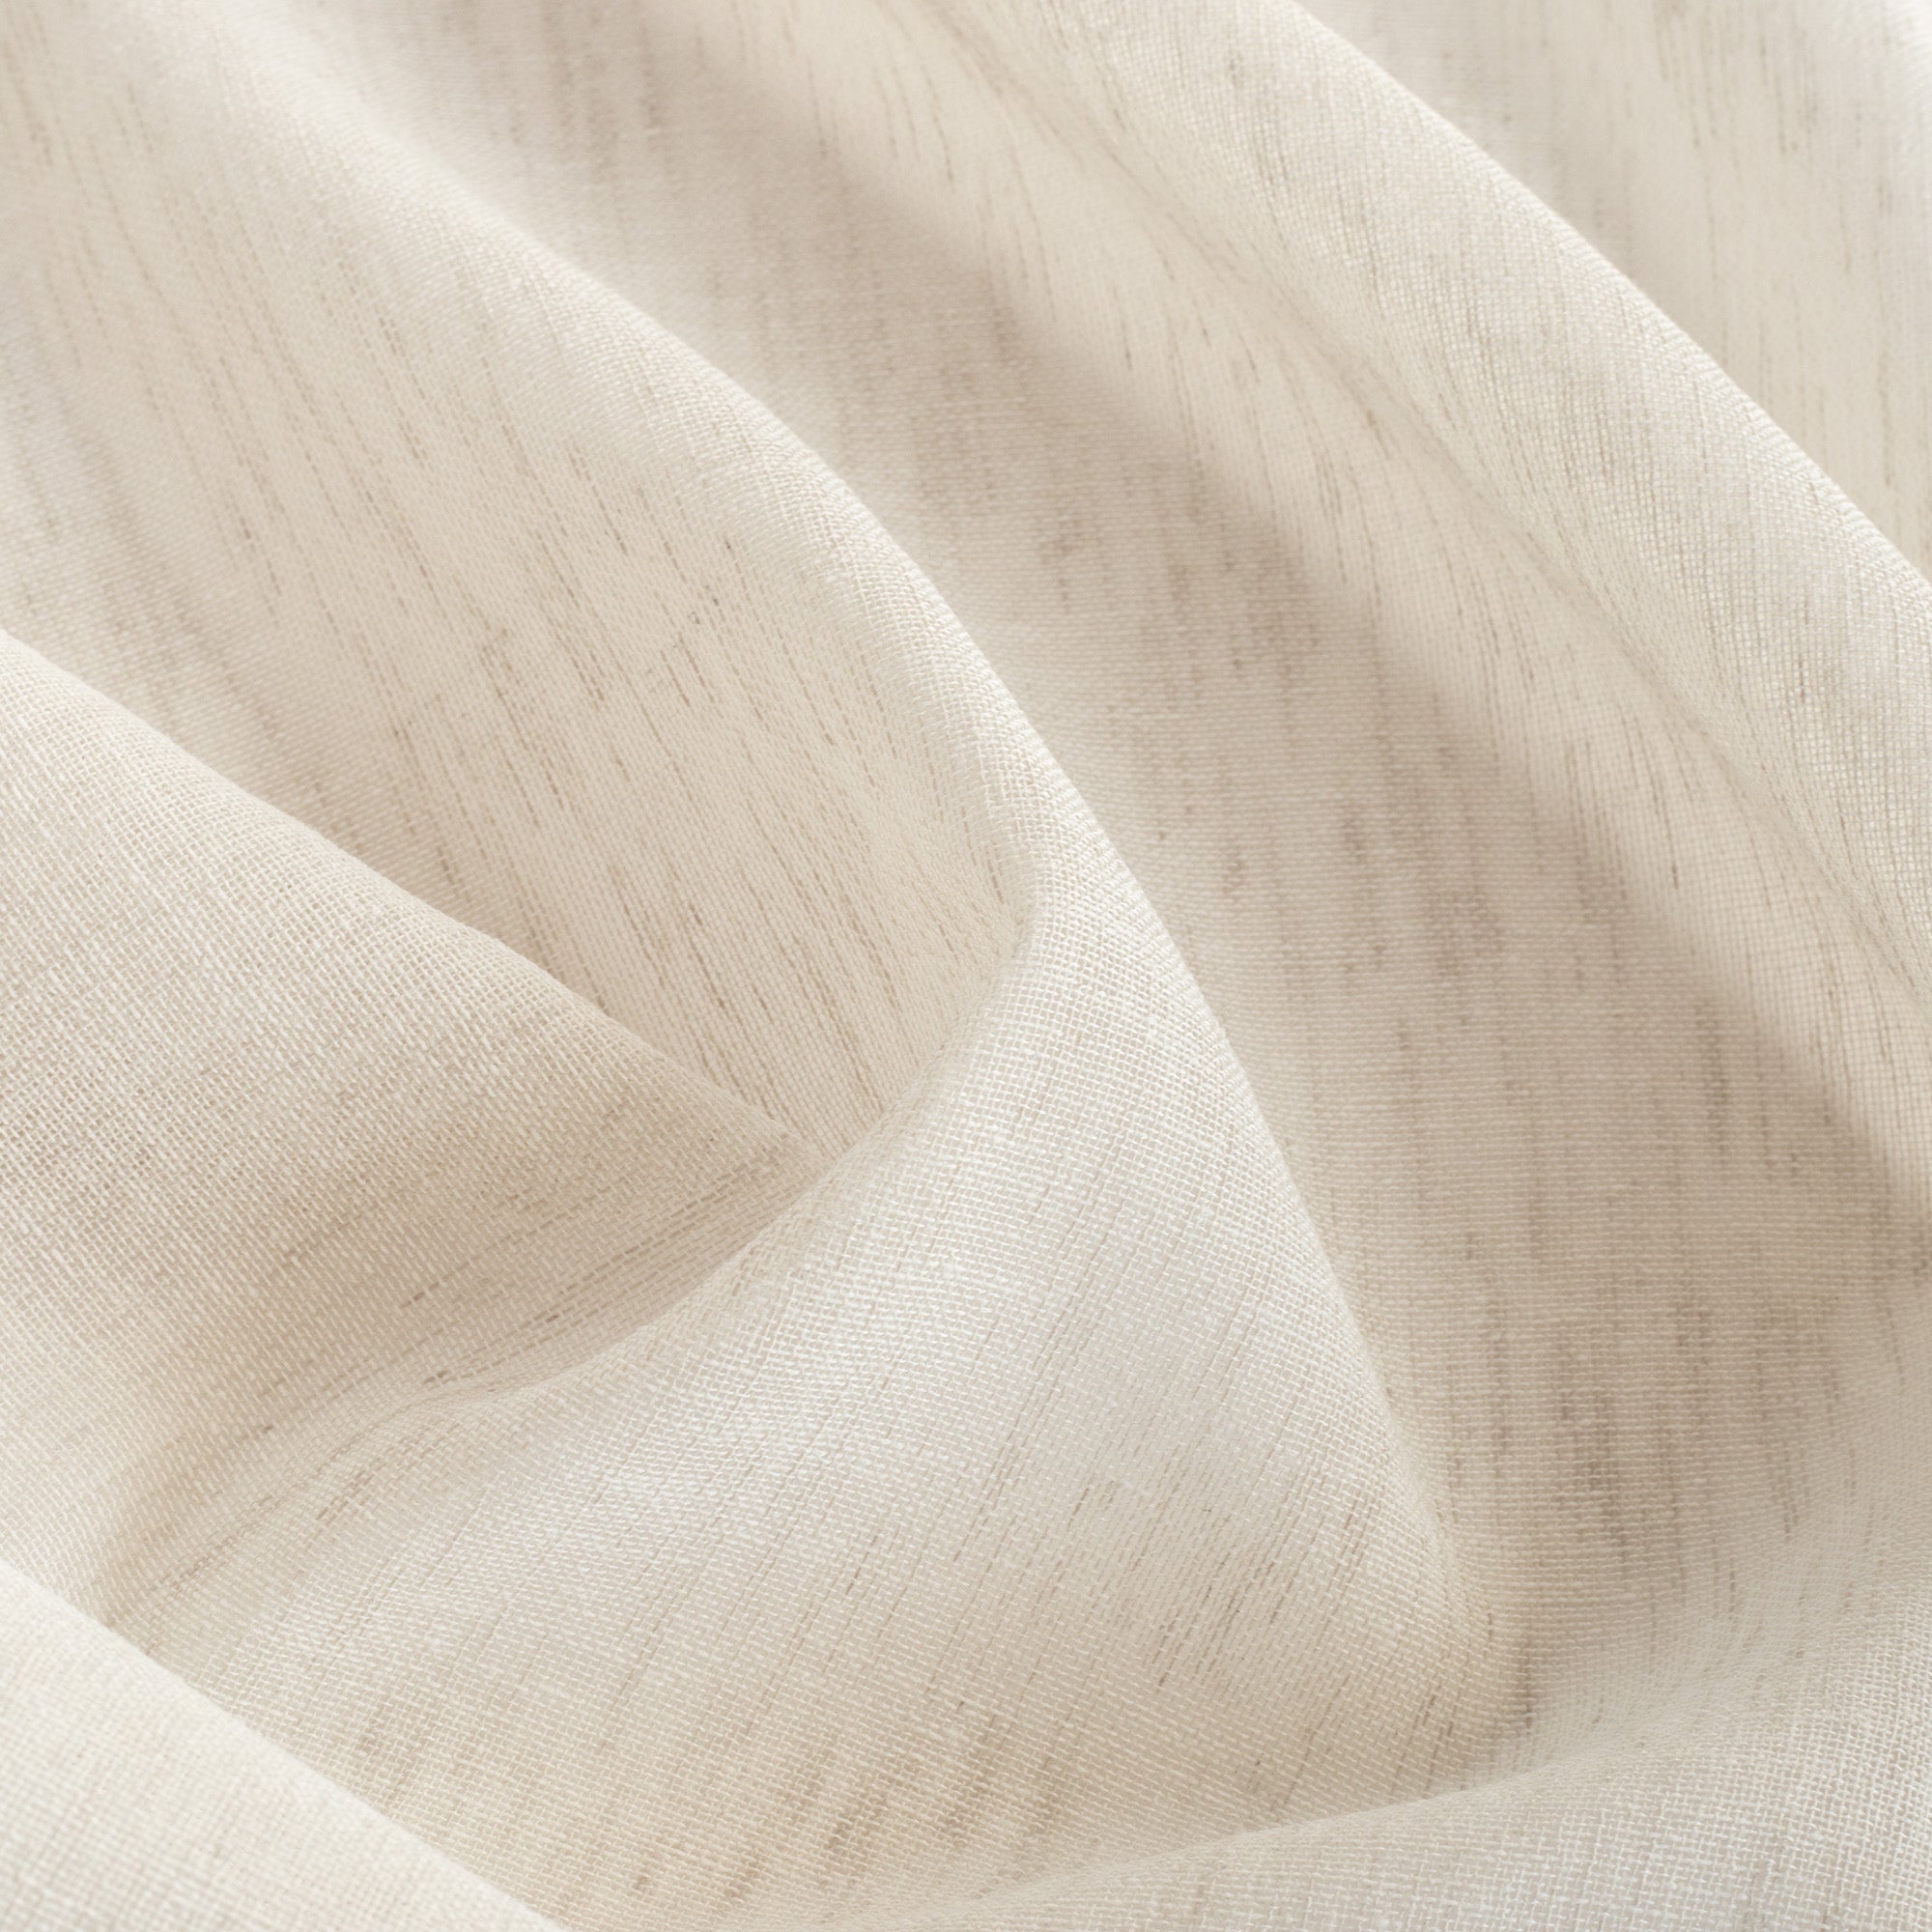 Palmero Flax, a sandy flax-toned sheer drapery fabric from Tonic Living